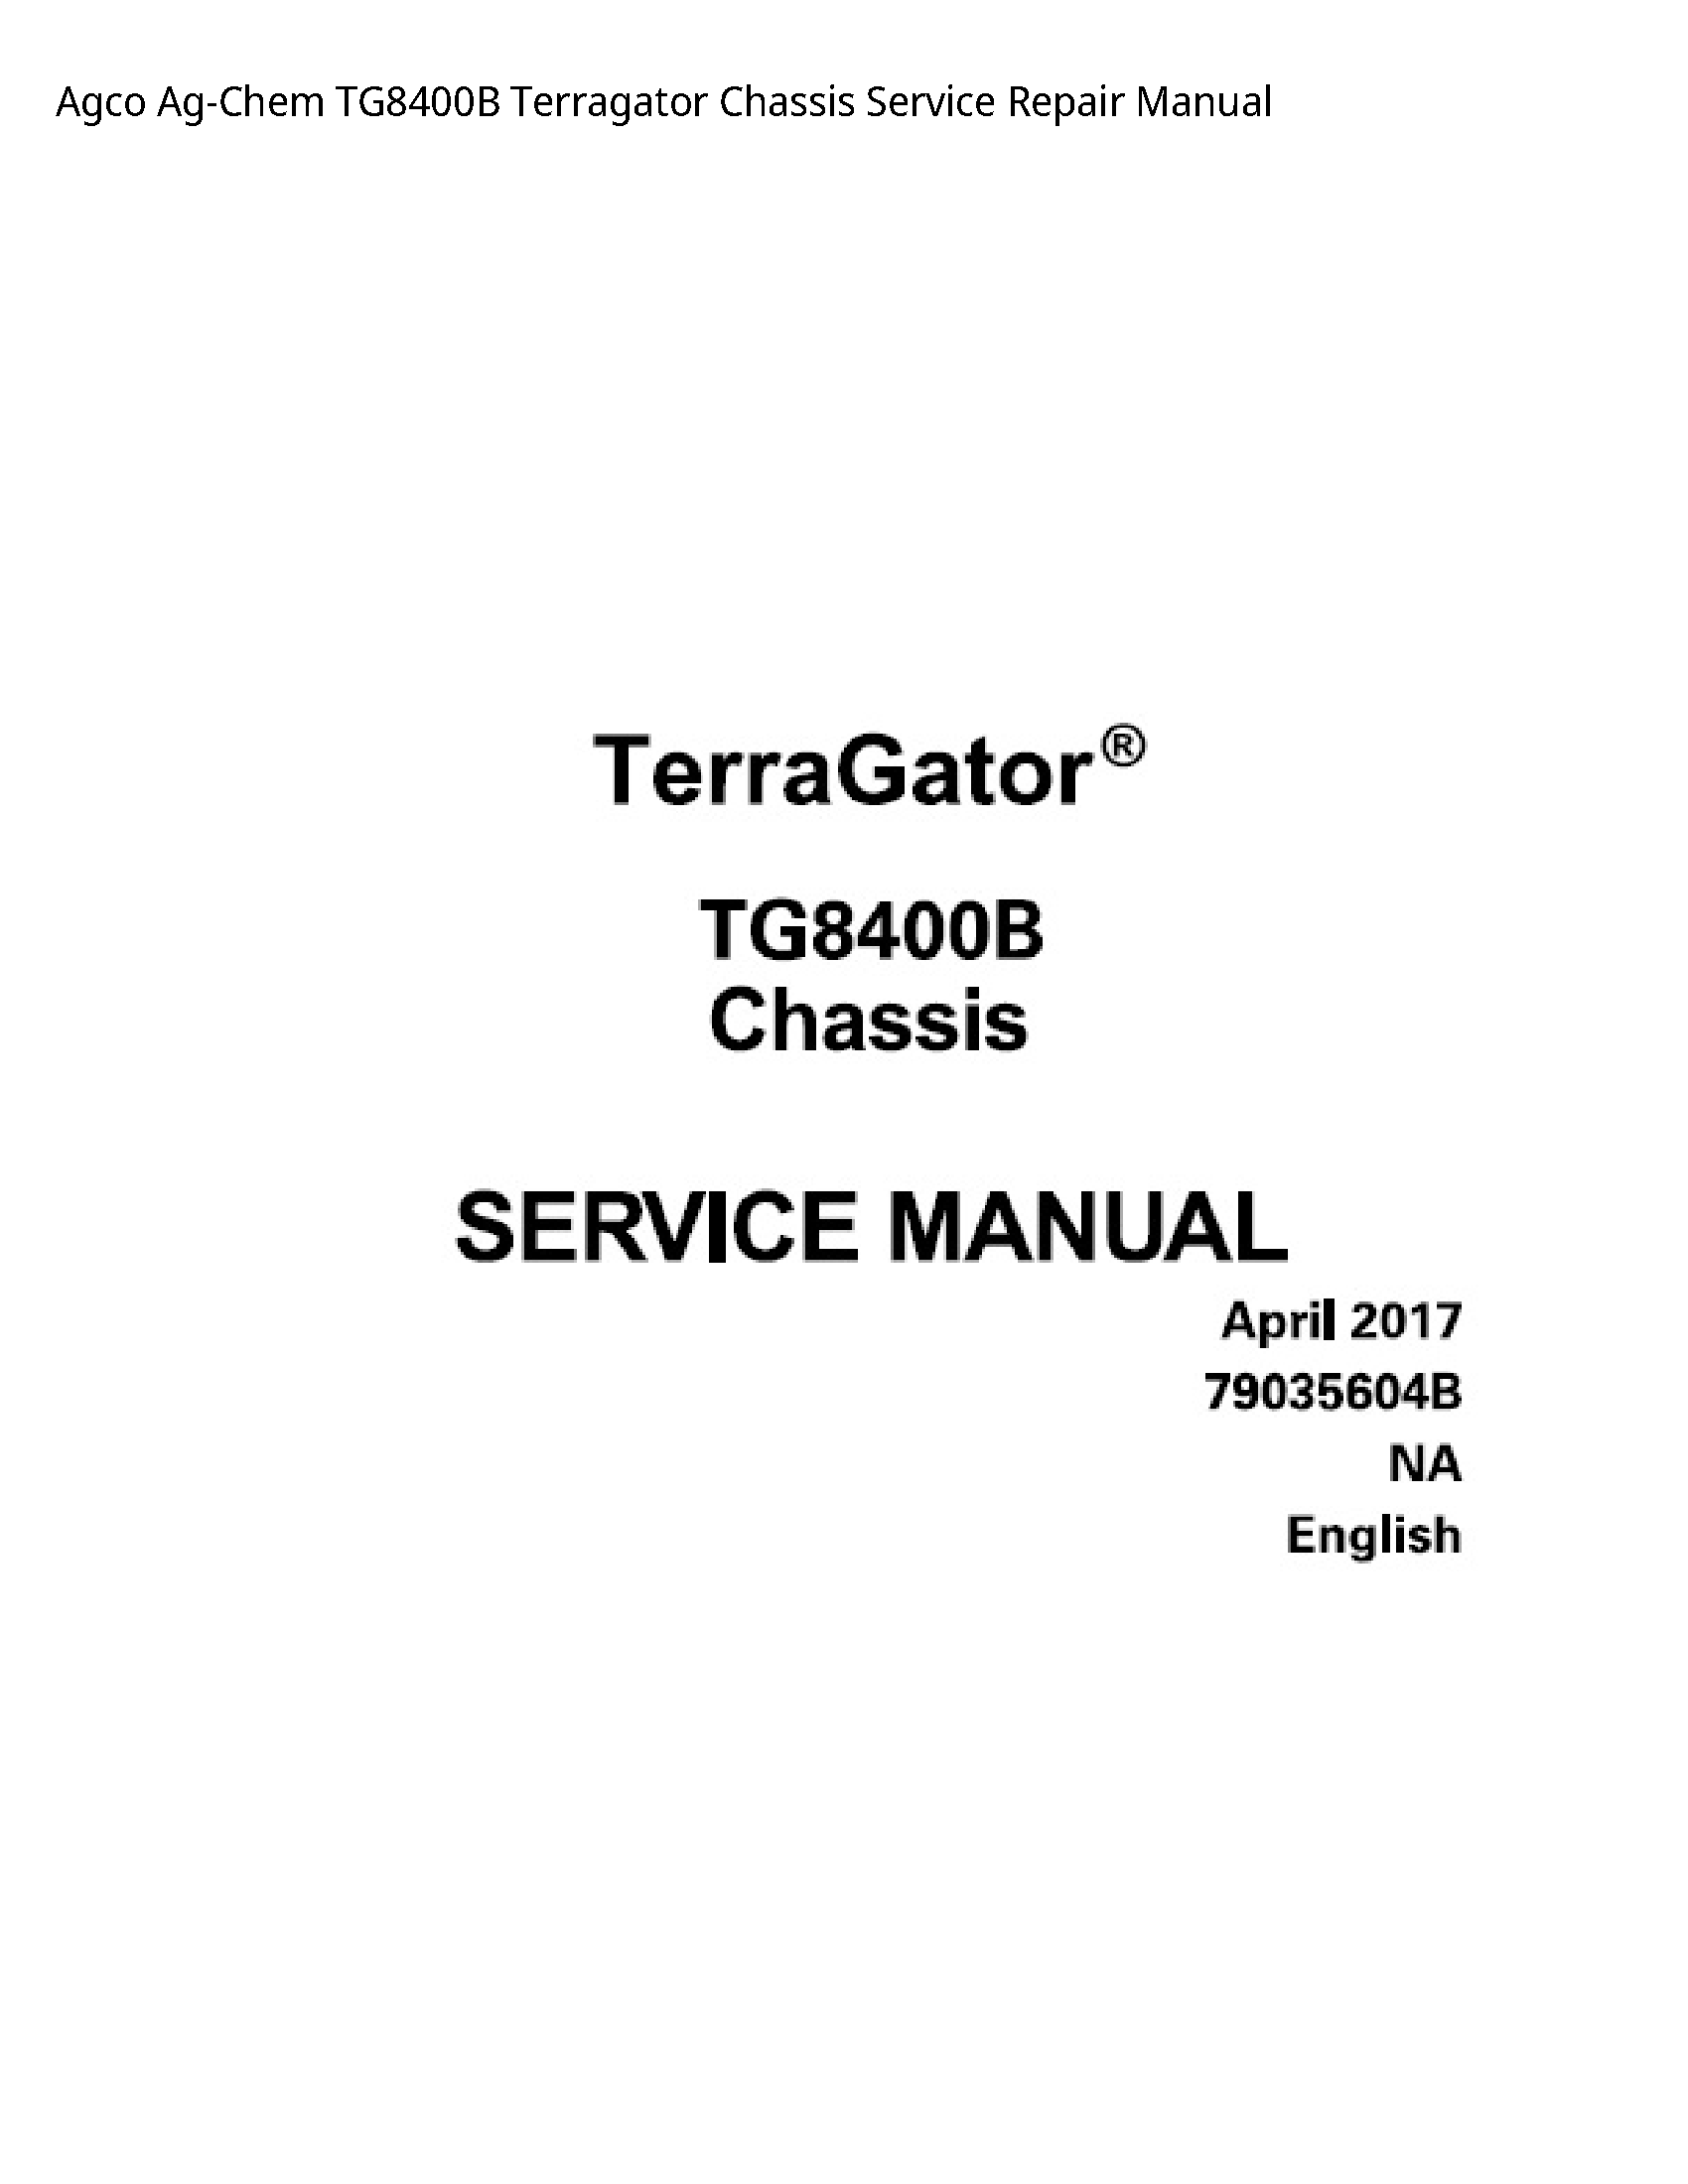 AGCO TG8400B Ag-Chem Terragator Chassis manual